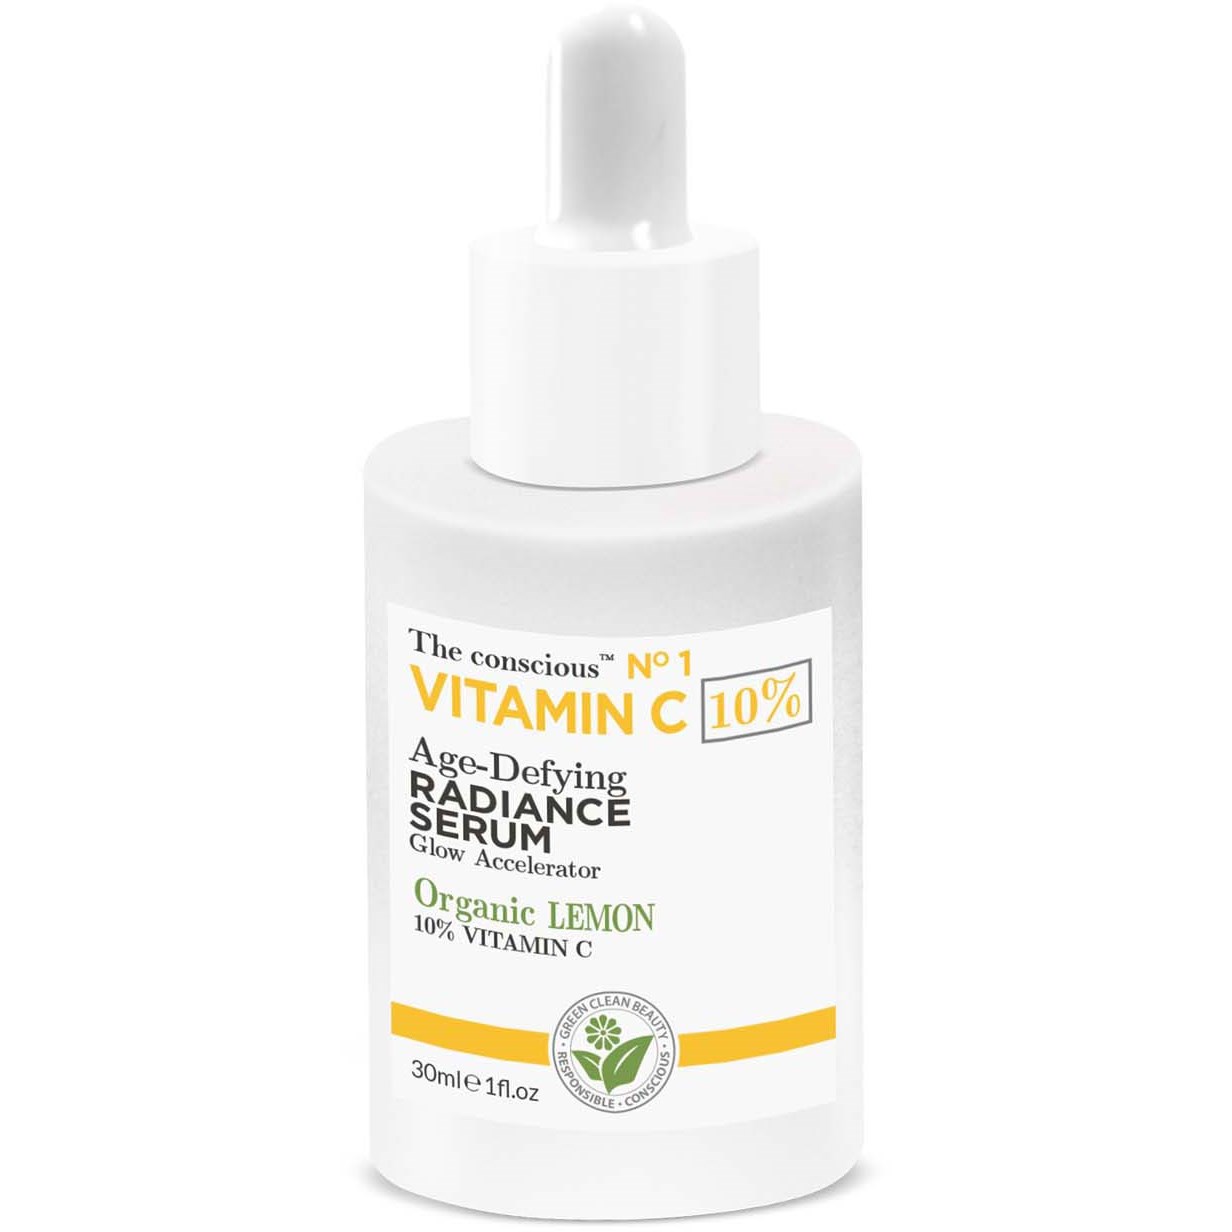 Biovène The conscious Vitamin C Age-Defying Radiance Serum Organic Lem